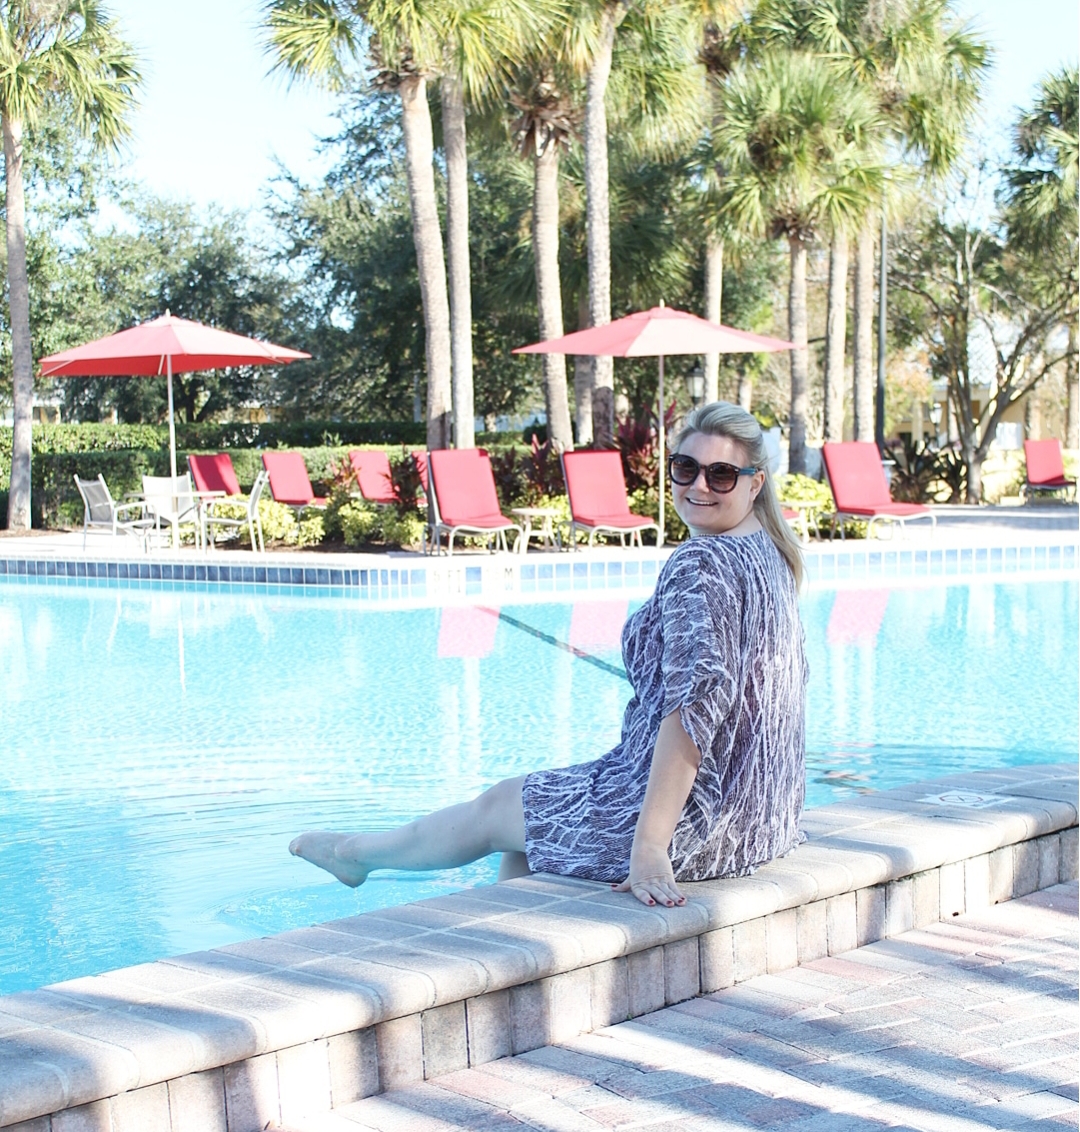 Splashing in the pool at the Wyndham Orlando Resort International Drive